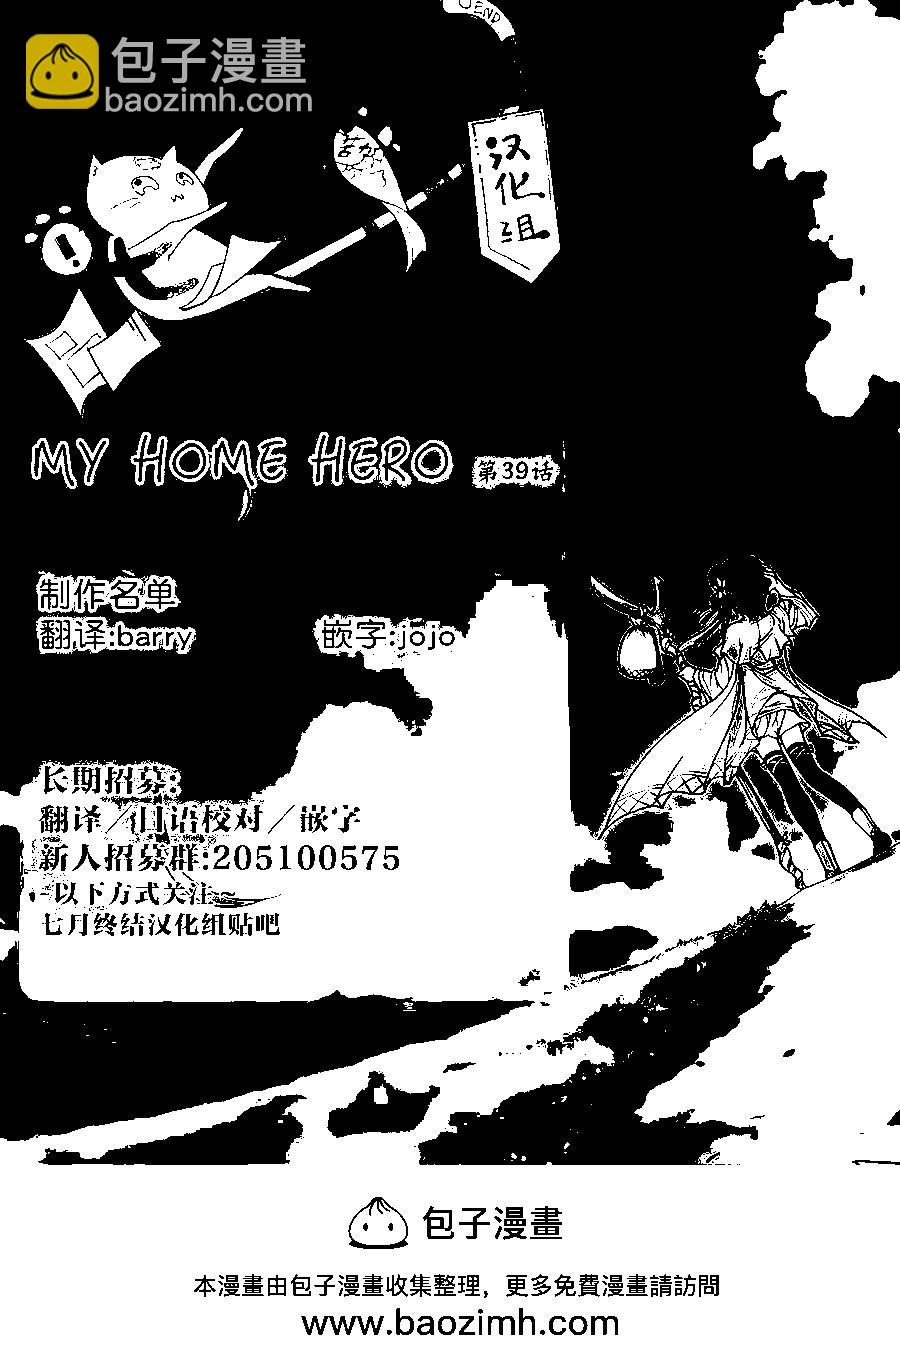 MY HOME HERO - 第39回 - 4